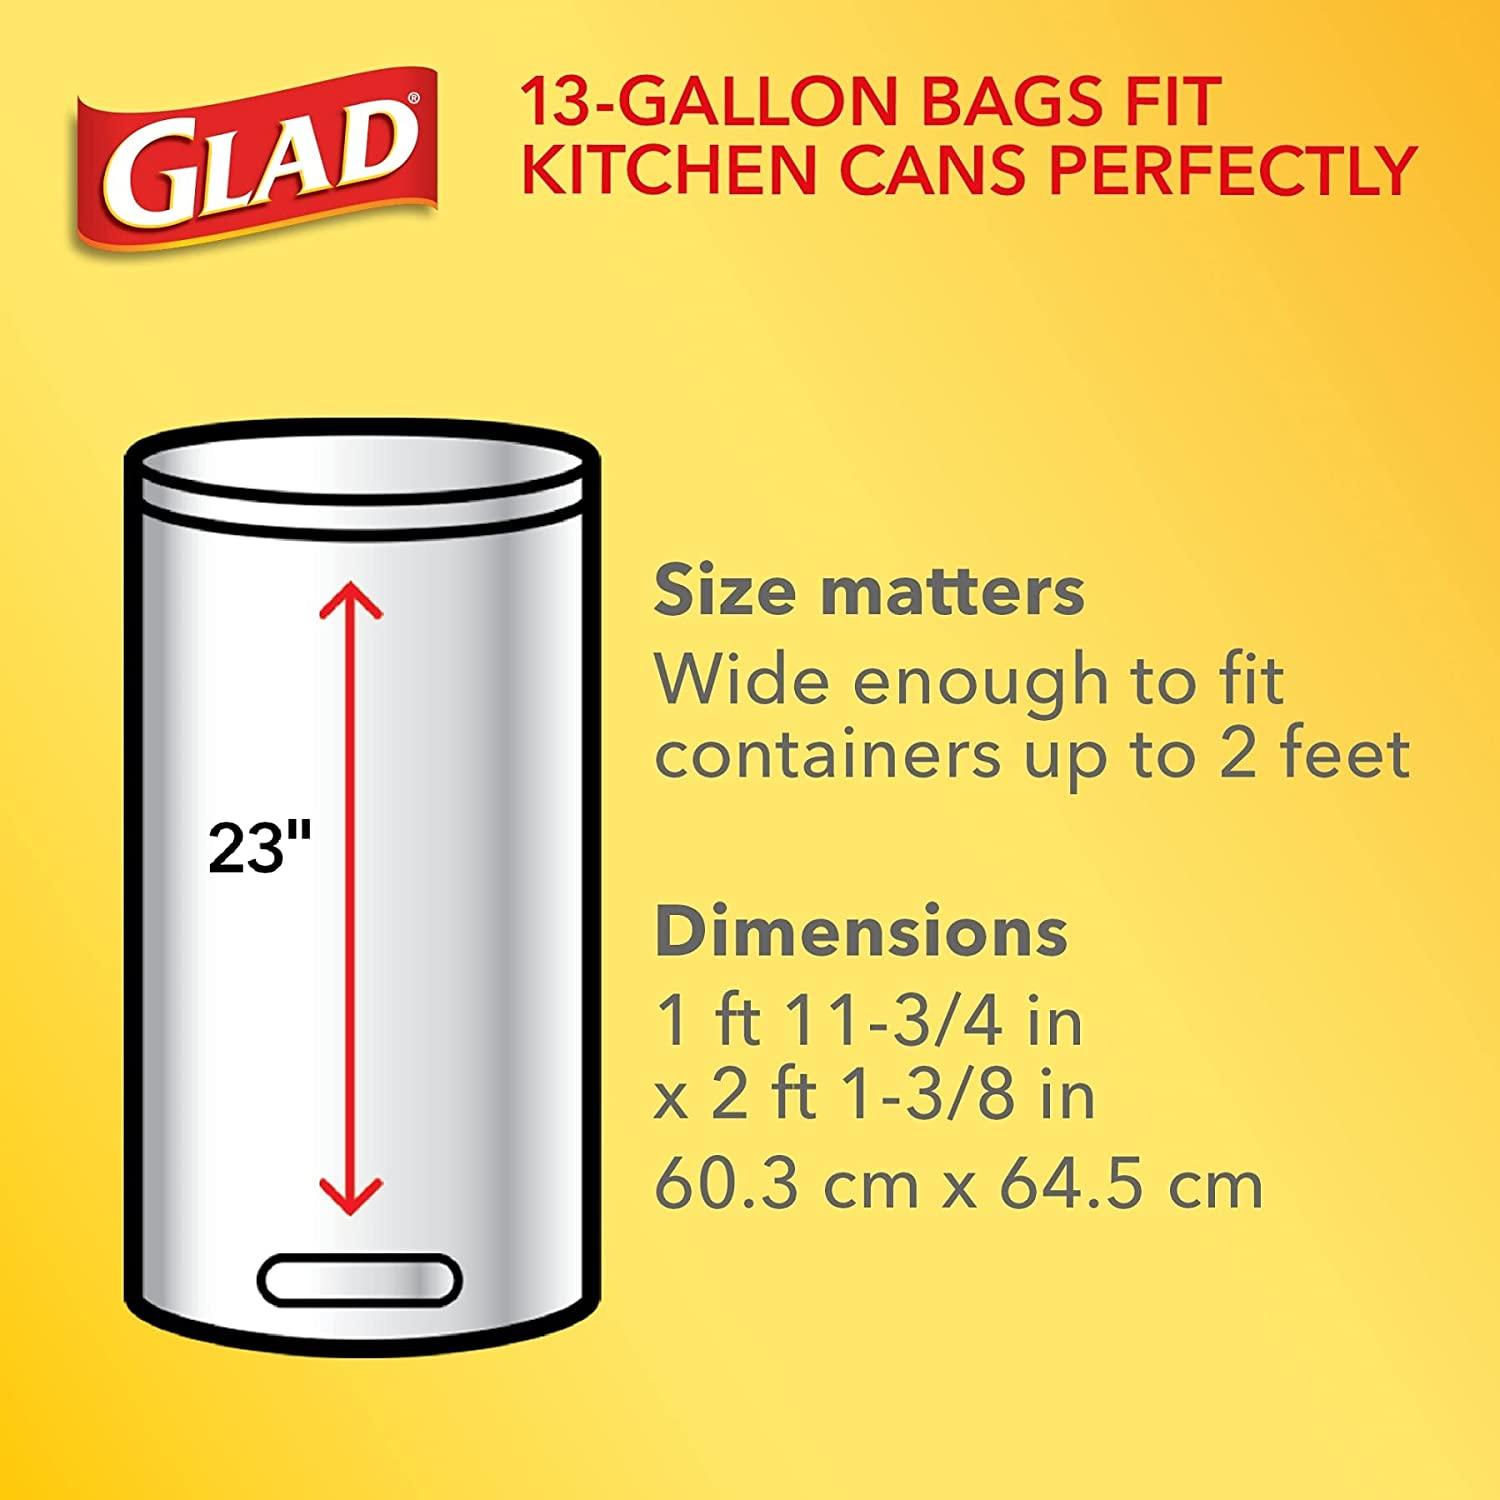 Glad ForceFlex Tall Kitchen Drawstring Trash Bags 13 Gallon Grey